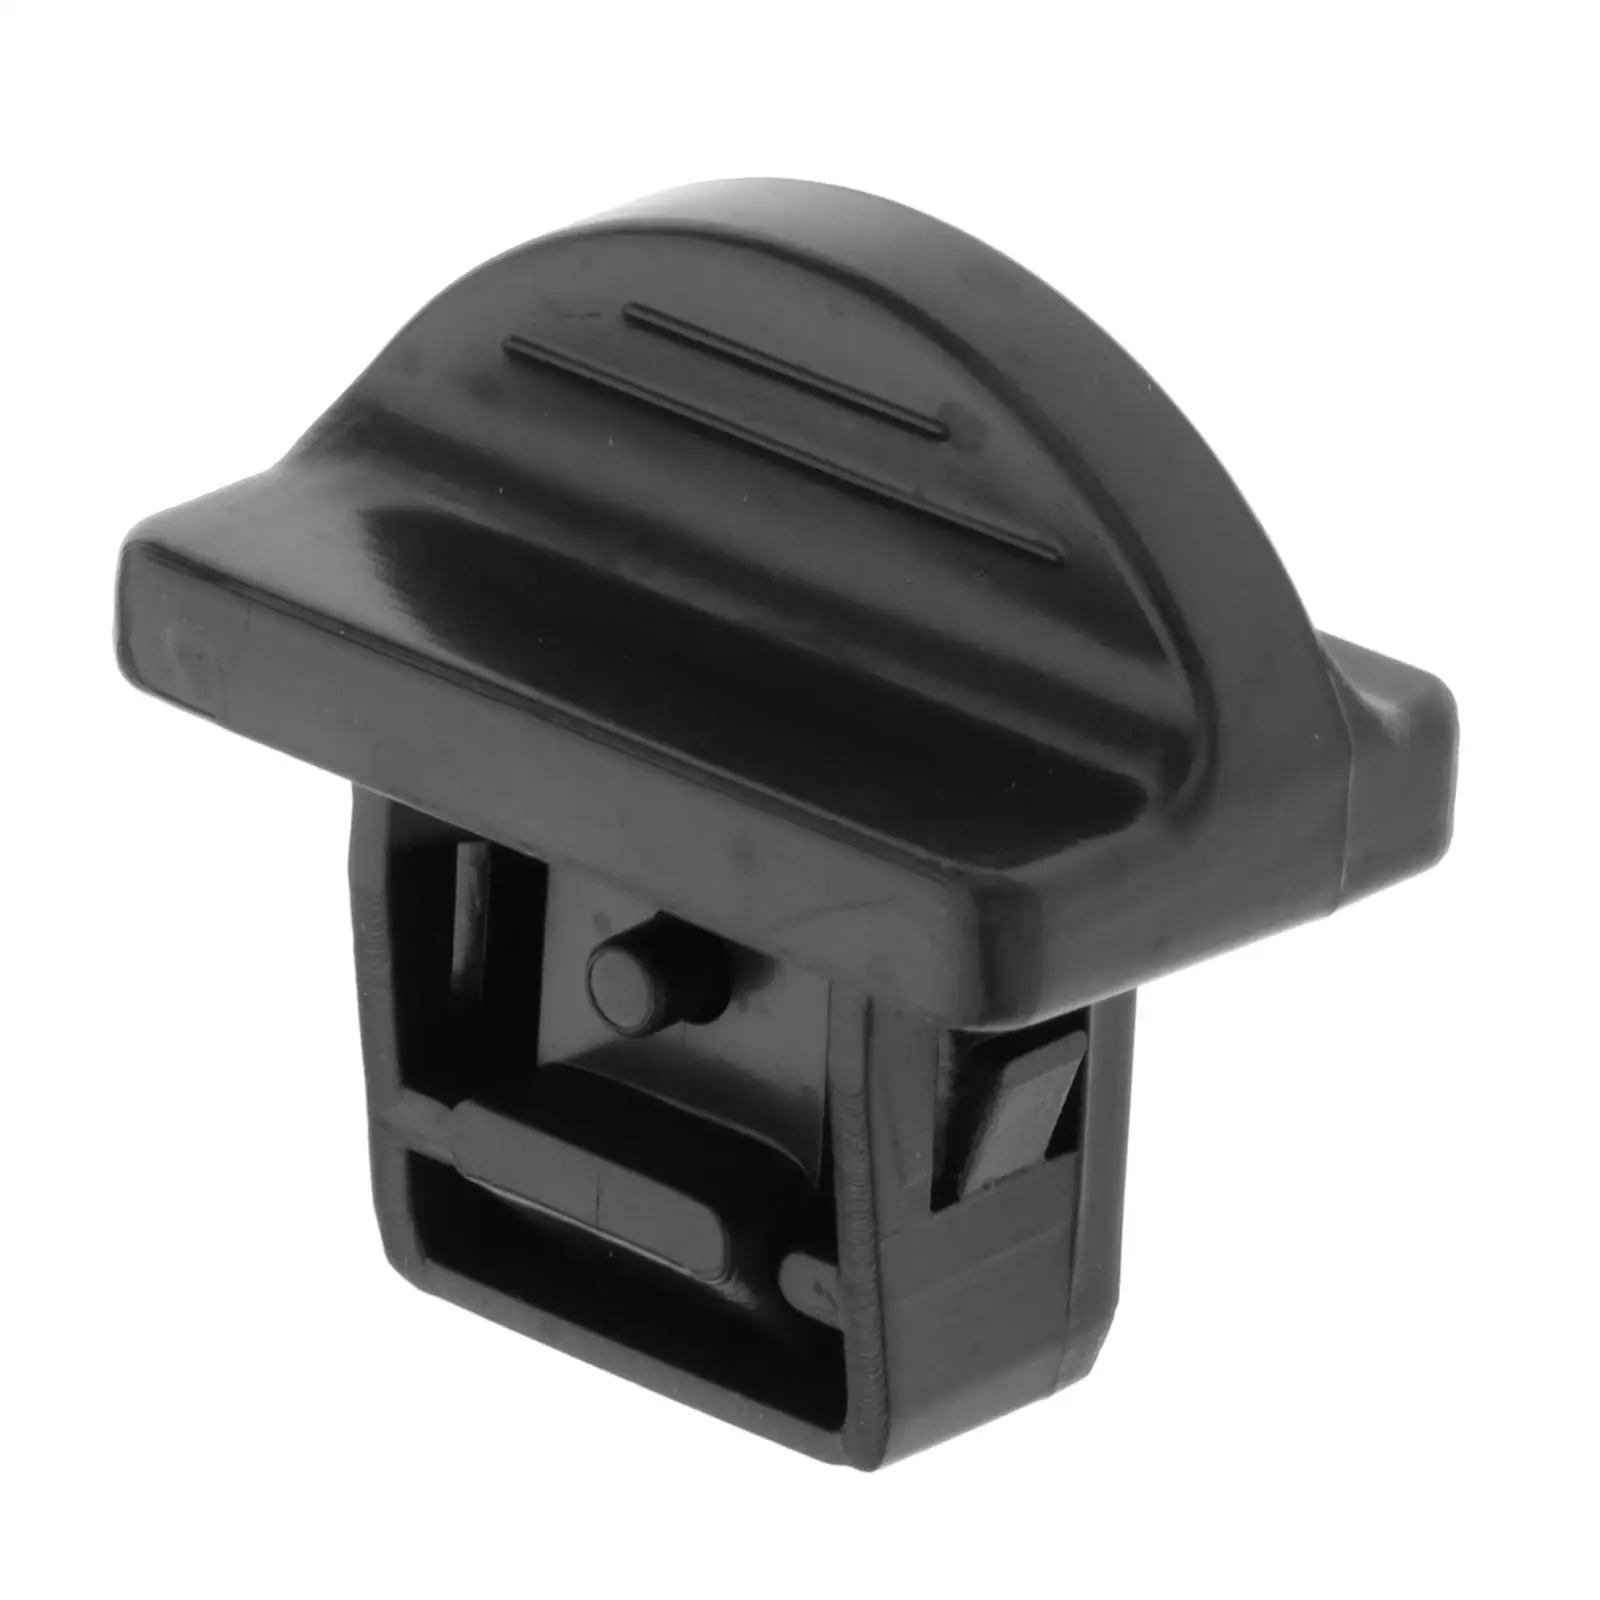 

Storage Latch Fastener for GU2-62875-02-00 Professional Accessories (Black Color)